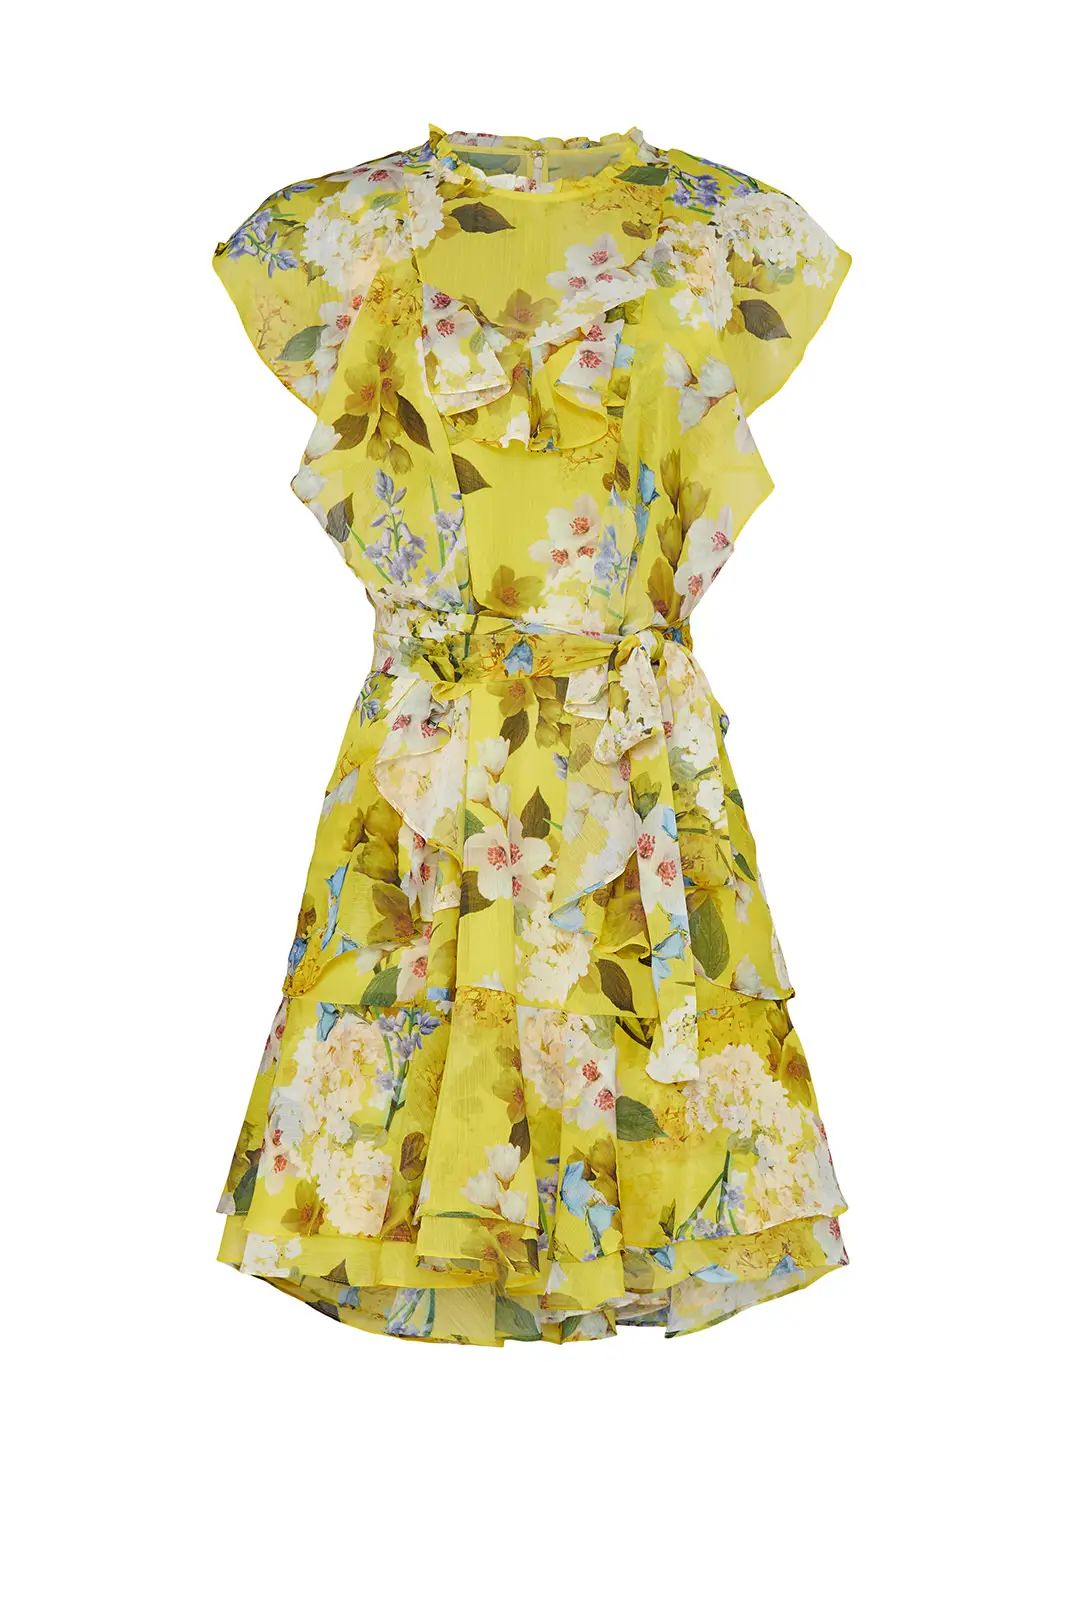 Marissa Webb Collective Ruffle Mini Dress | Rent the Runway